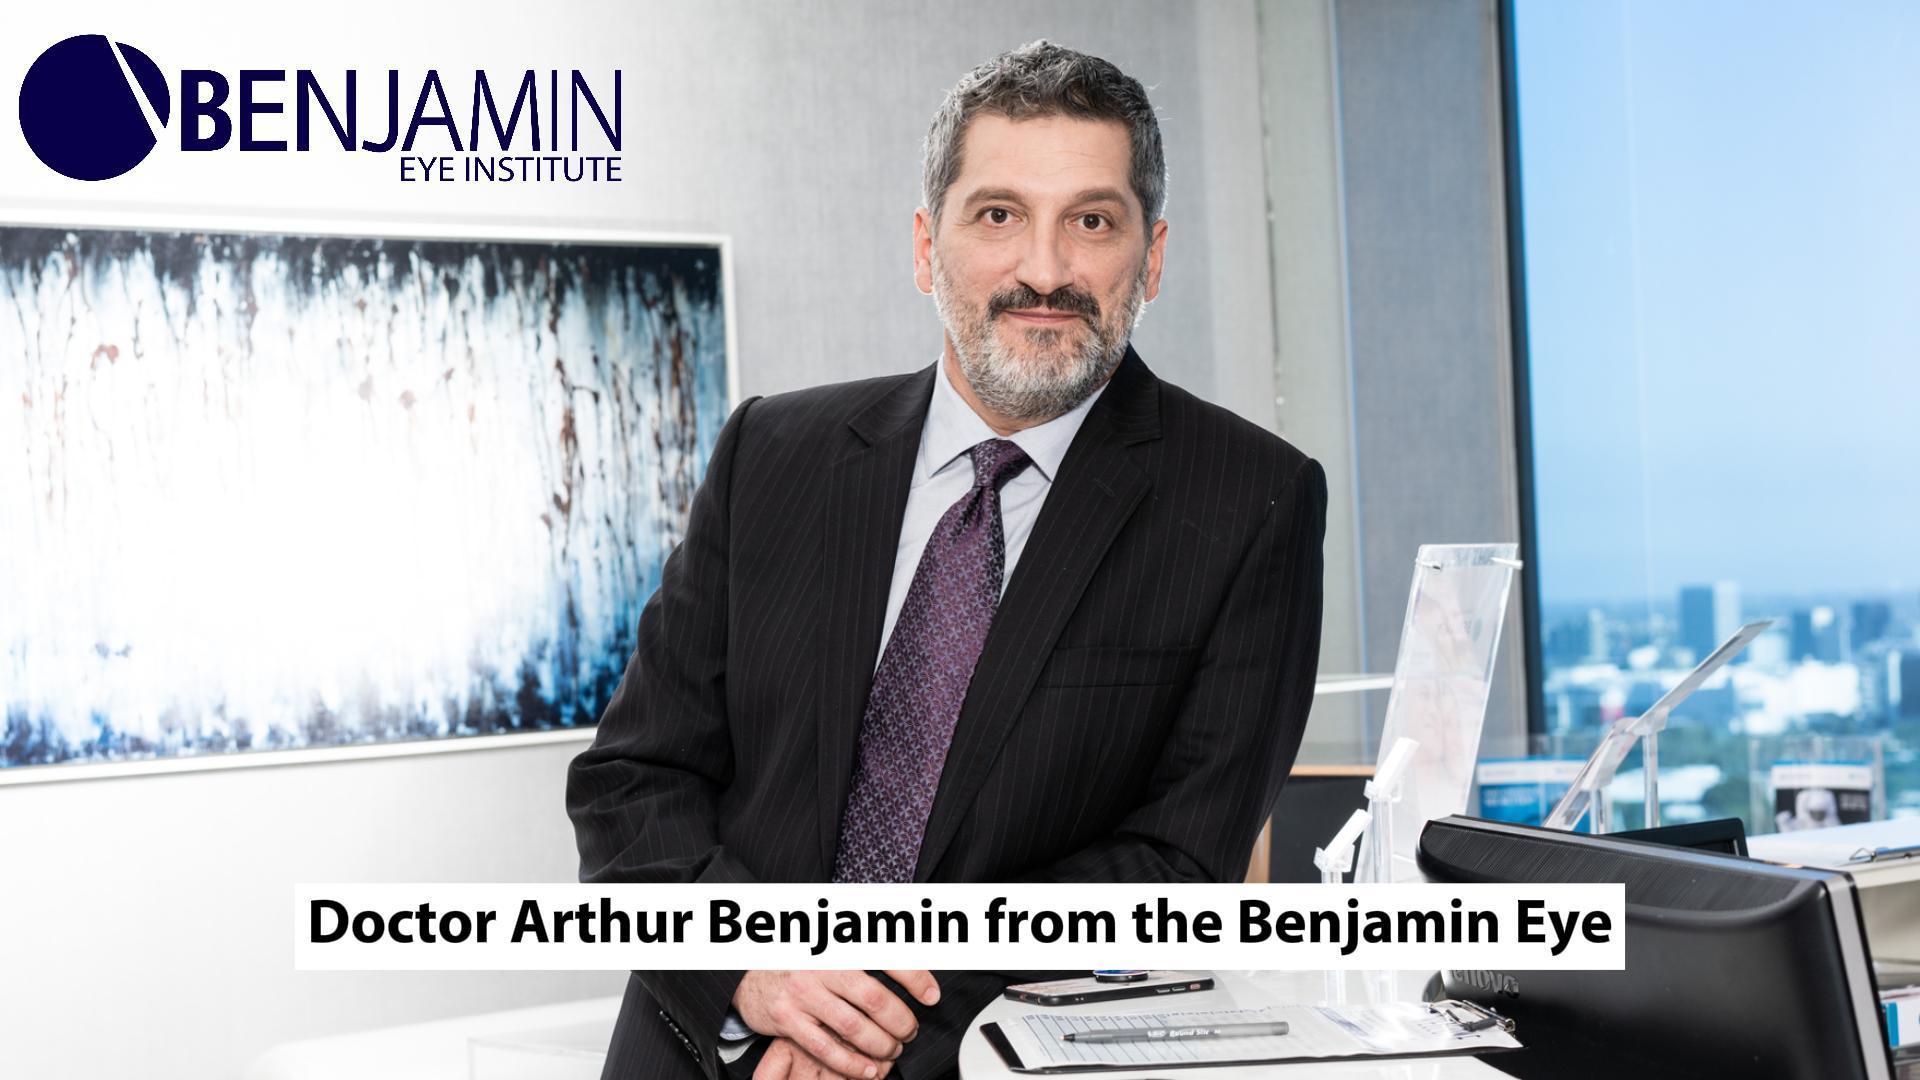 Dr. Arthur Benjamin joined Doug Stefan on the Good Day Show